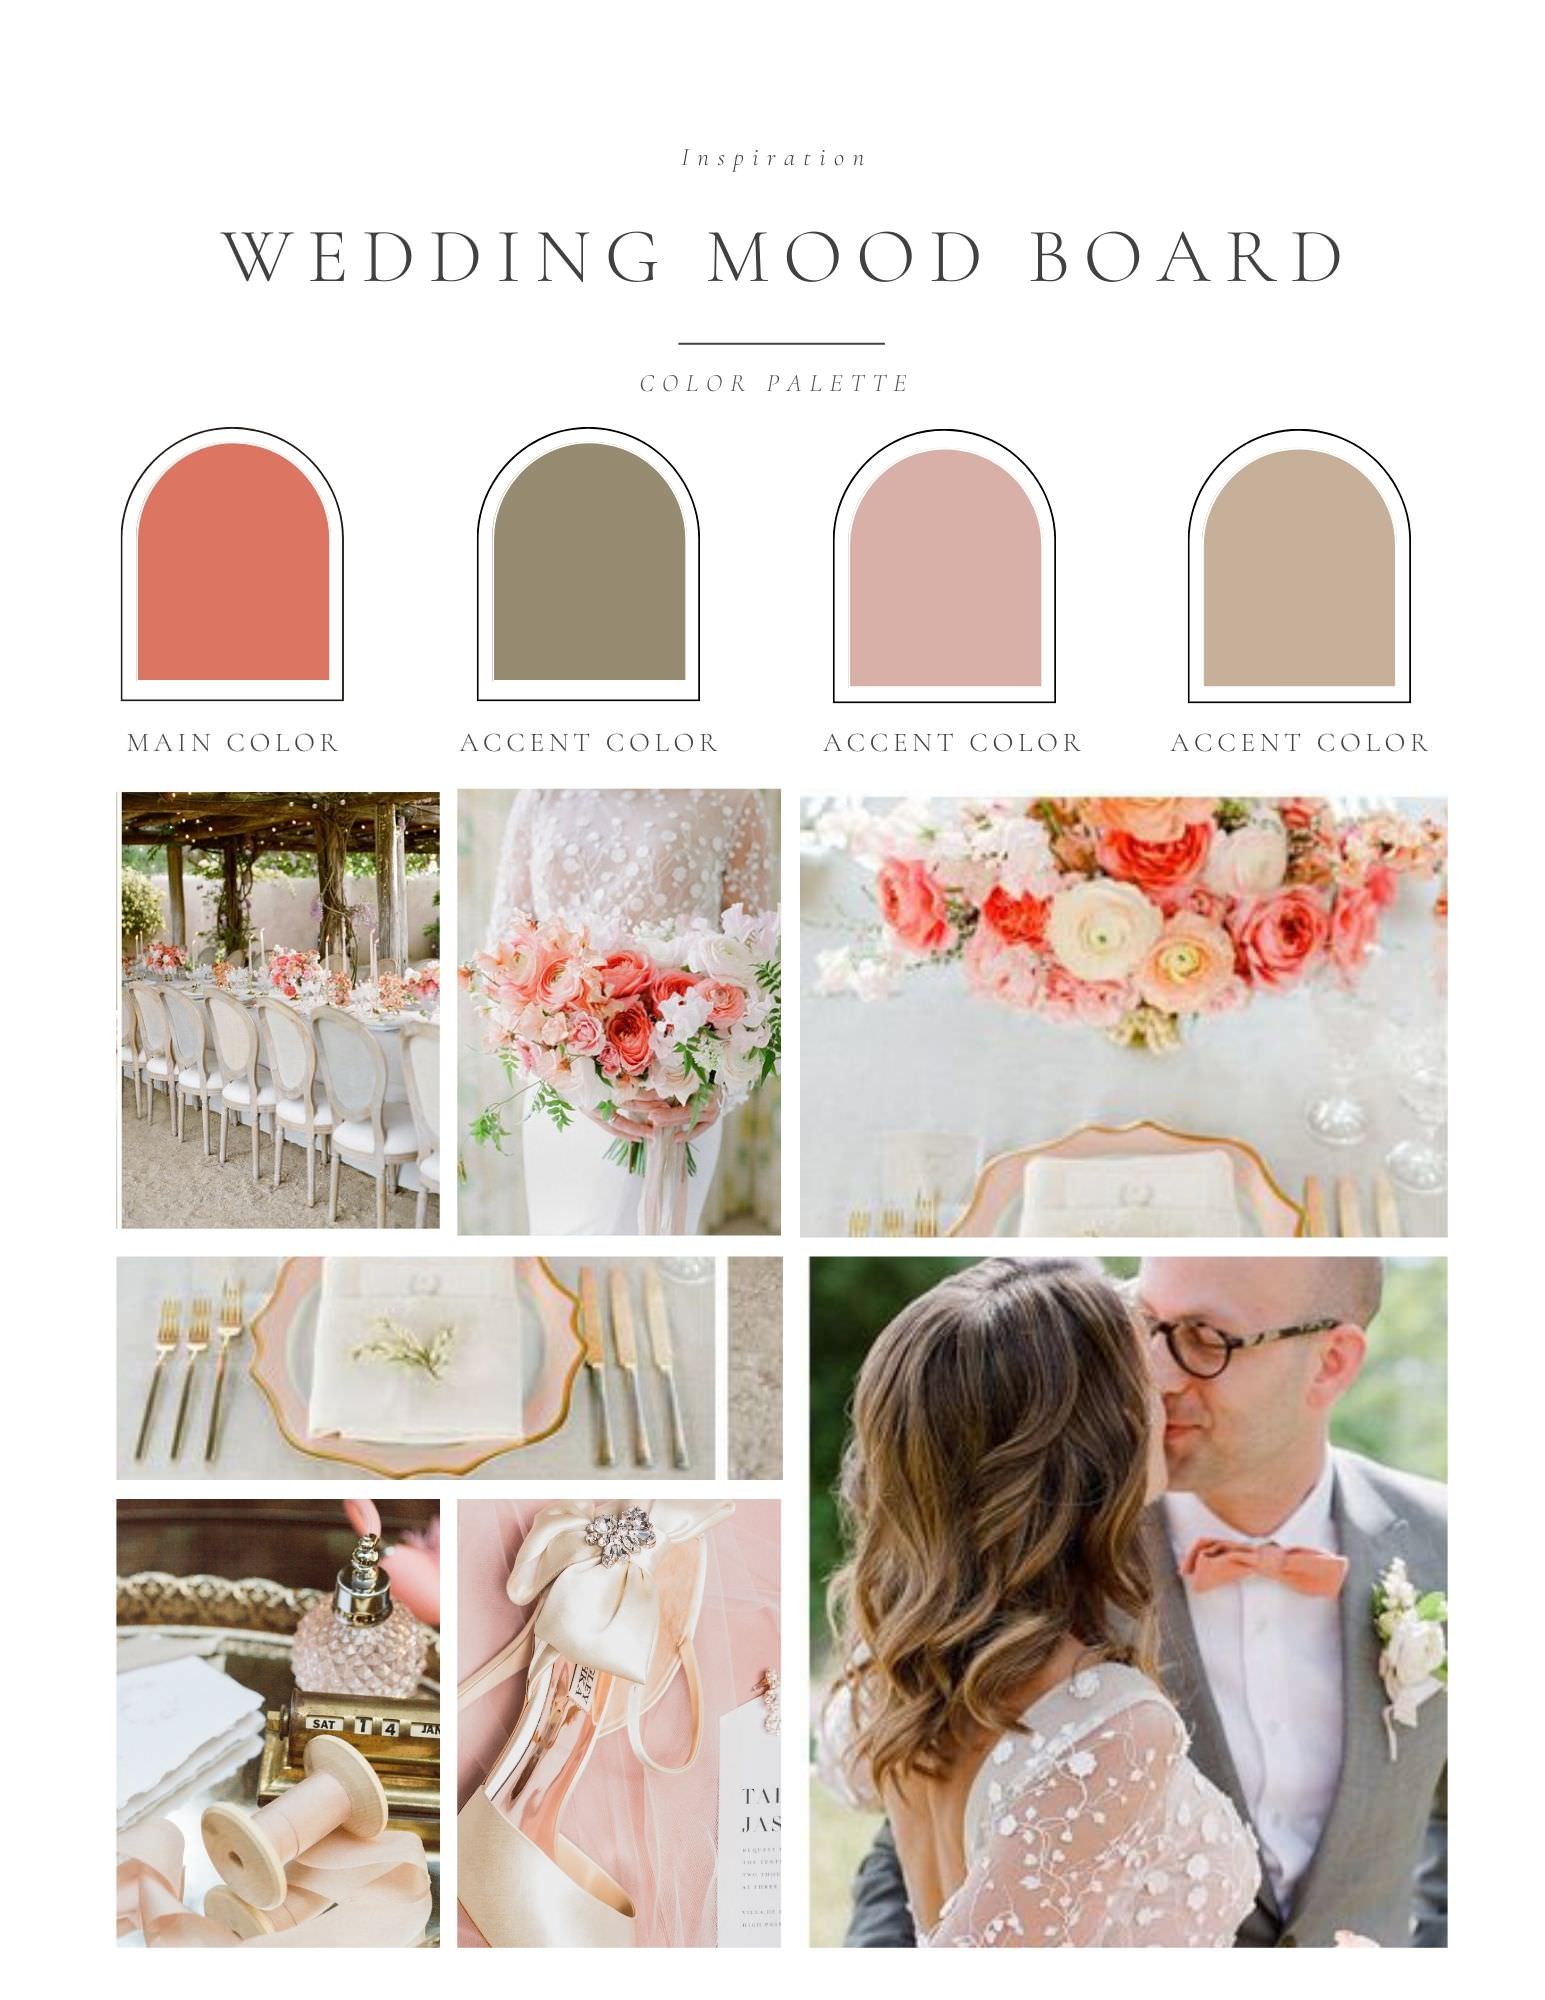 wedding mood board inspiration in wedding planning binder planner